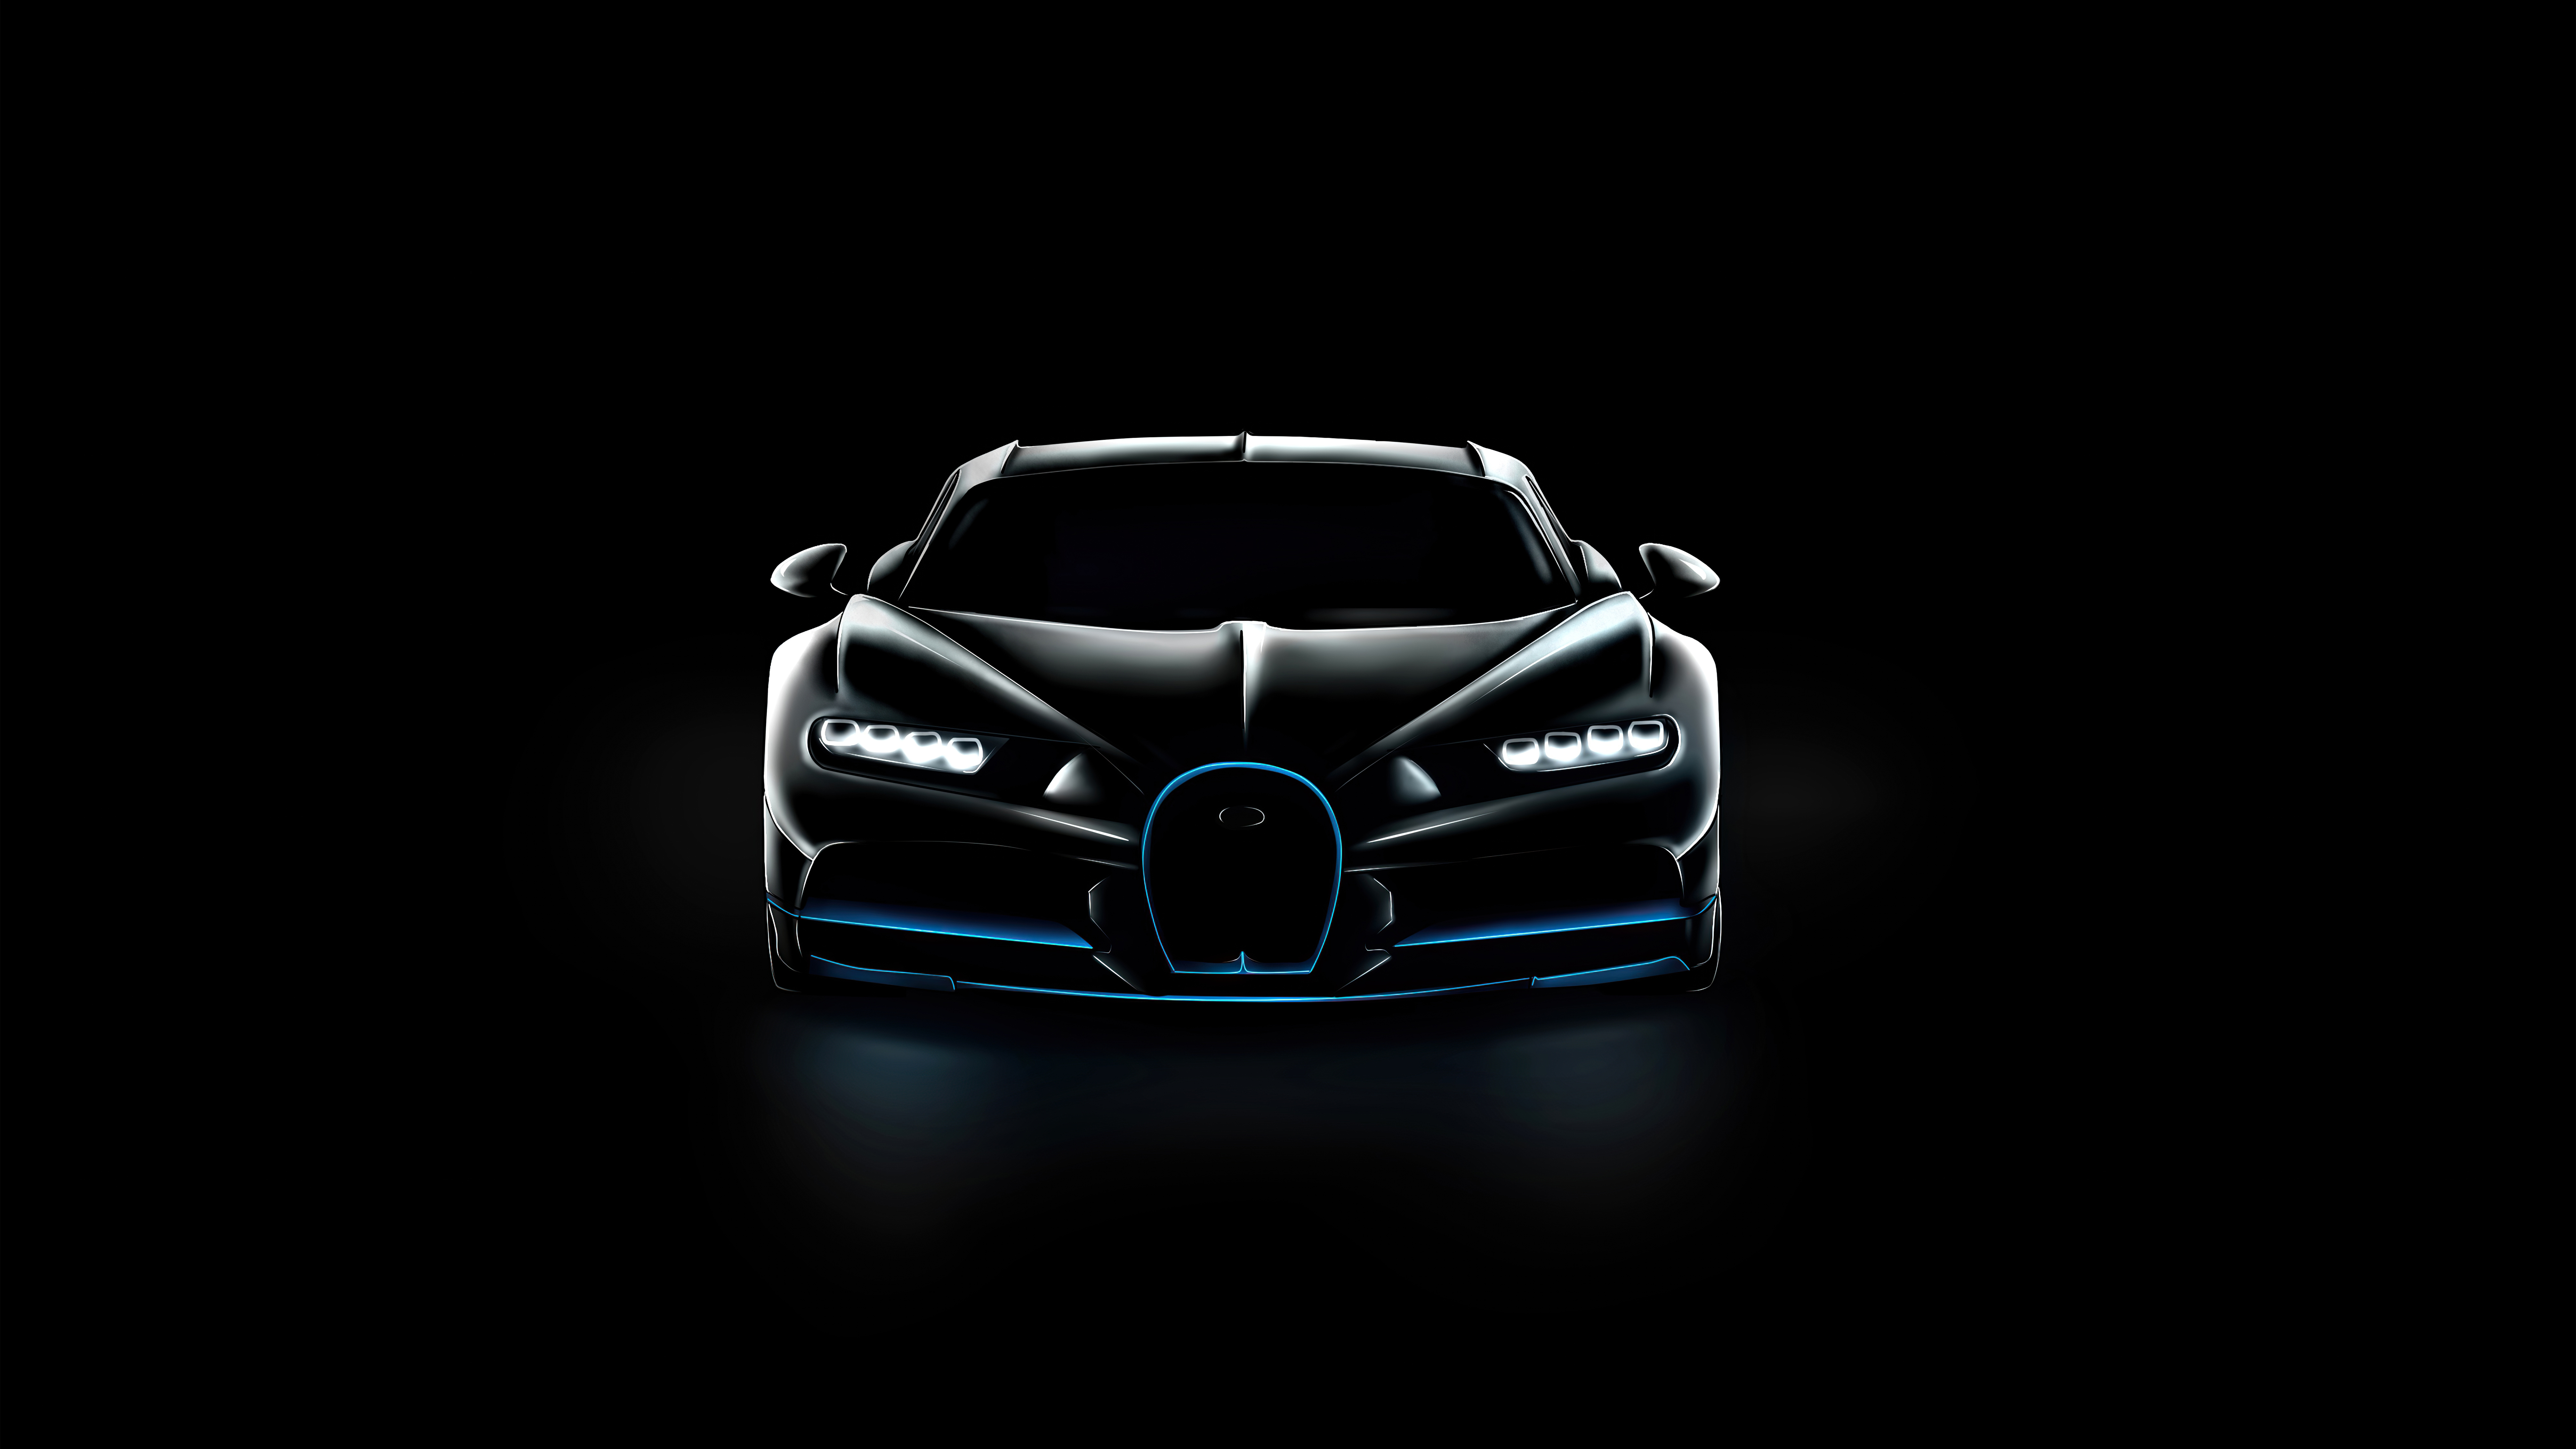 Download Bugatti Chiron wallpapers for mobile phone free Bugatti  Chiron HD pictures